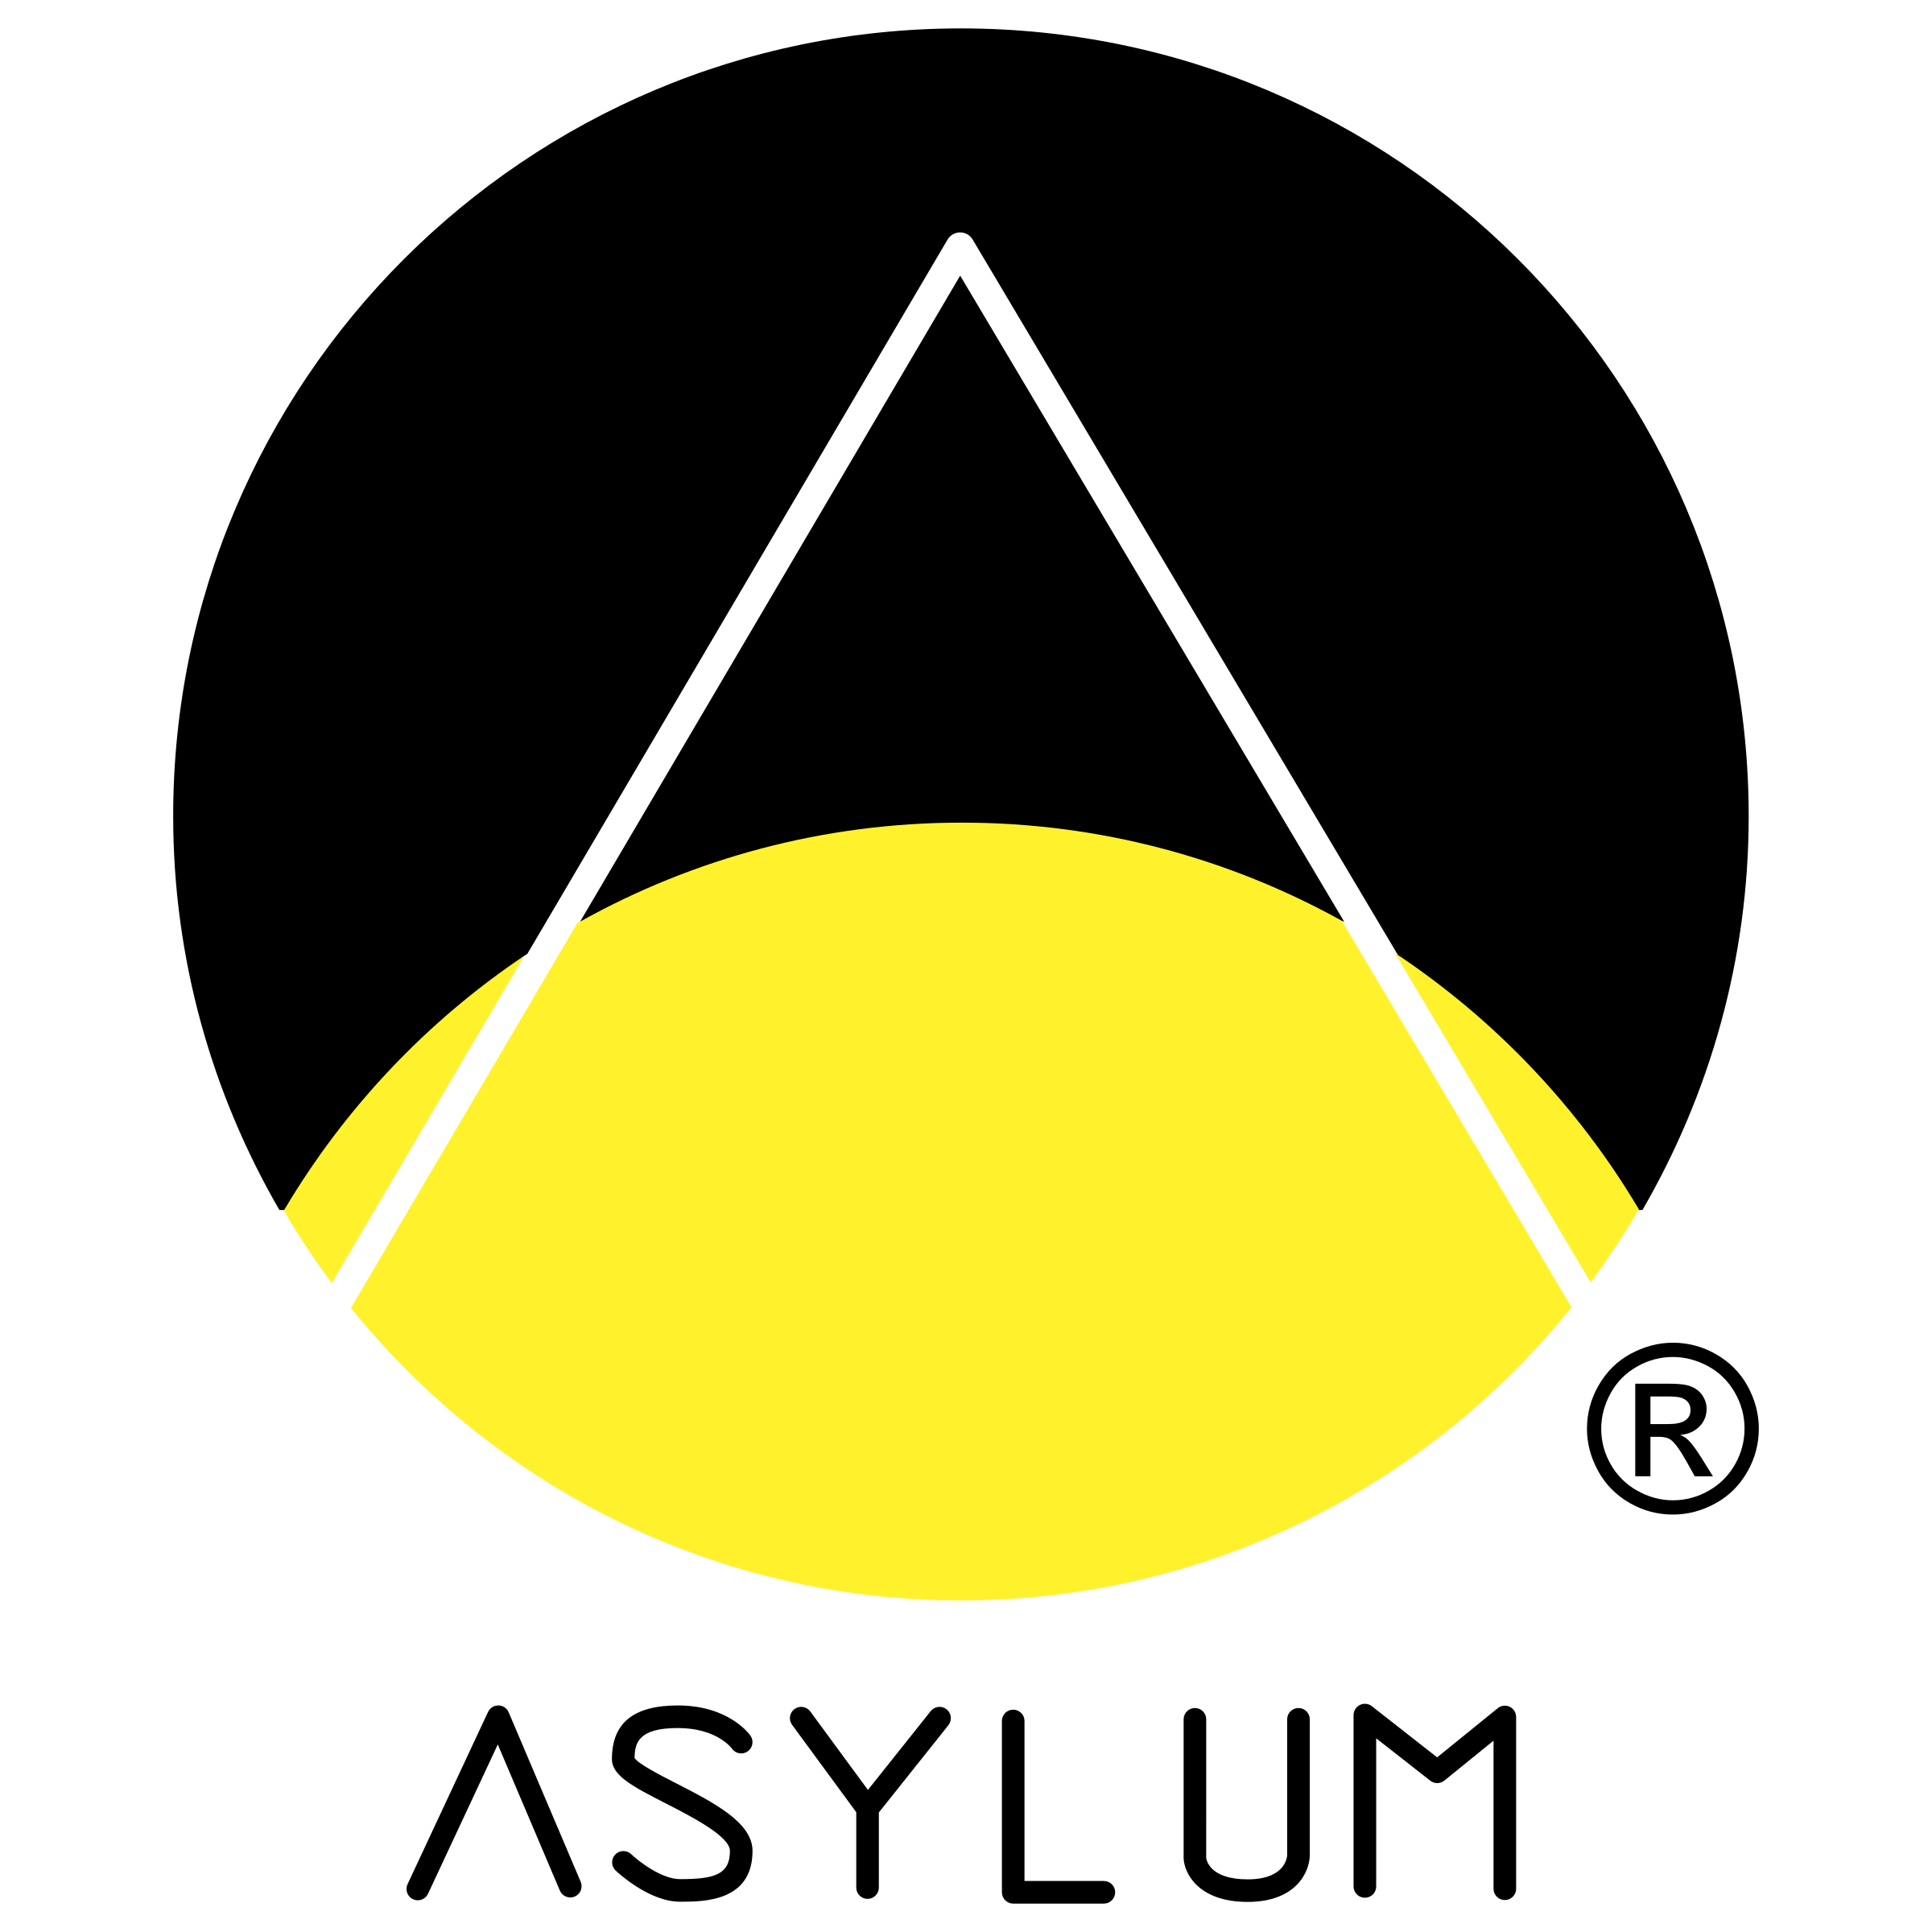 Asylum Logo - Asylum Logo PNG Transparent & SVG Vector - Freebie Supply